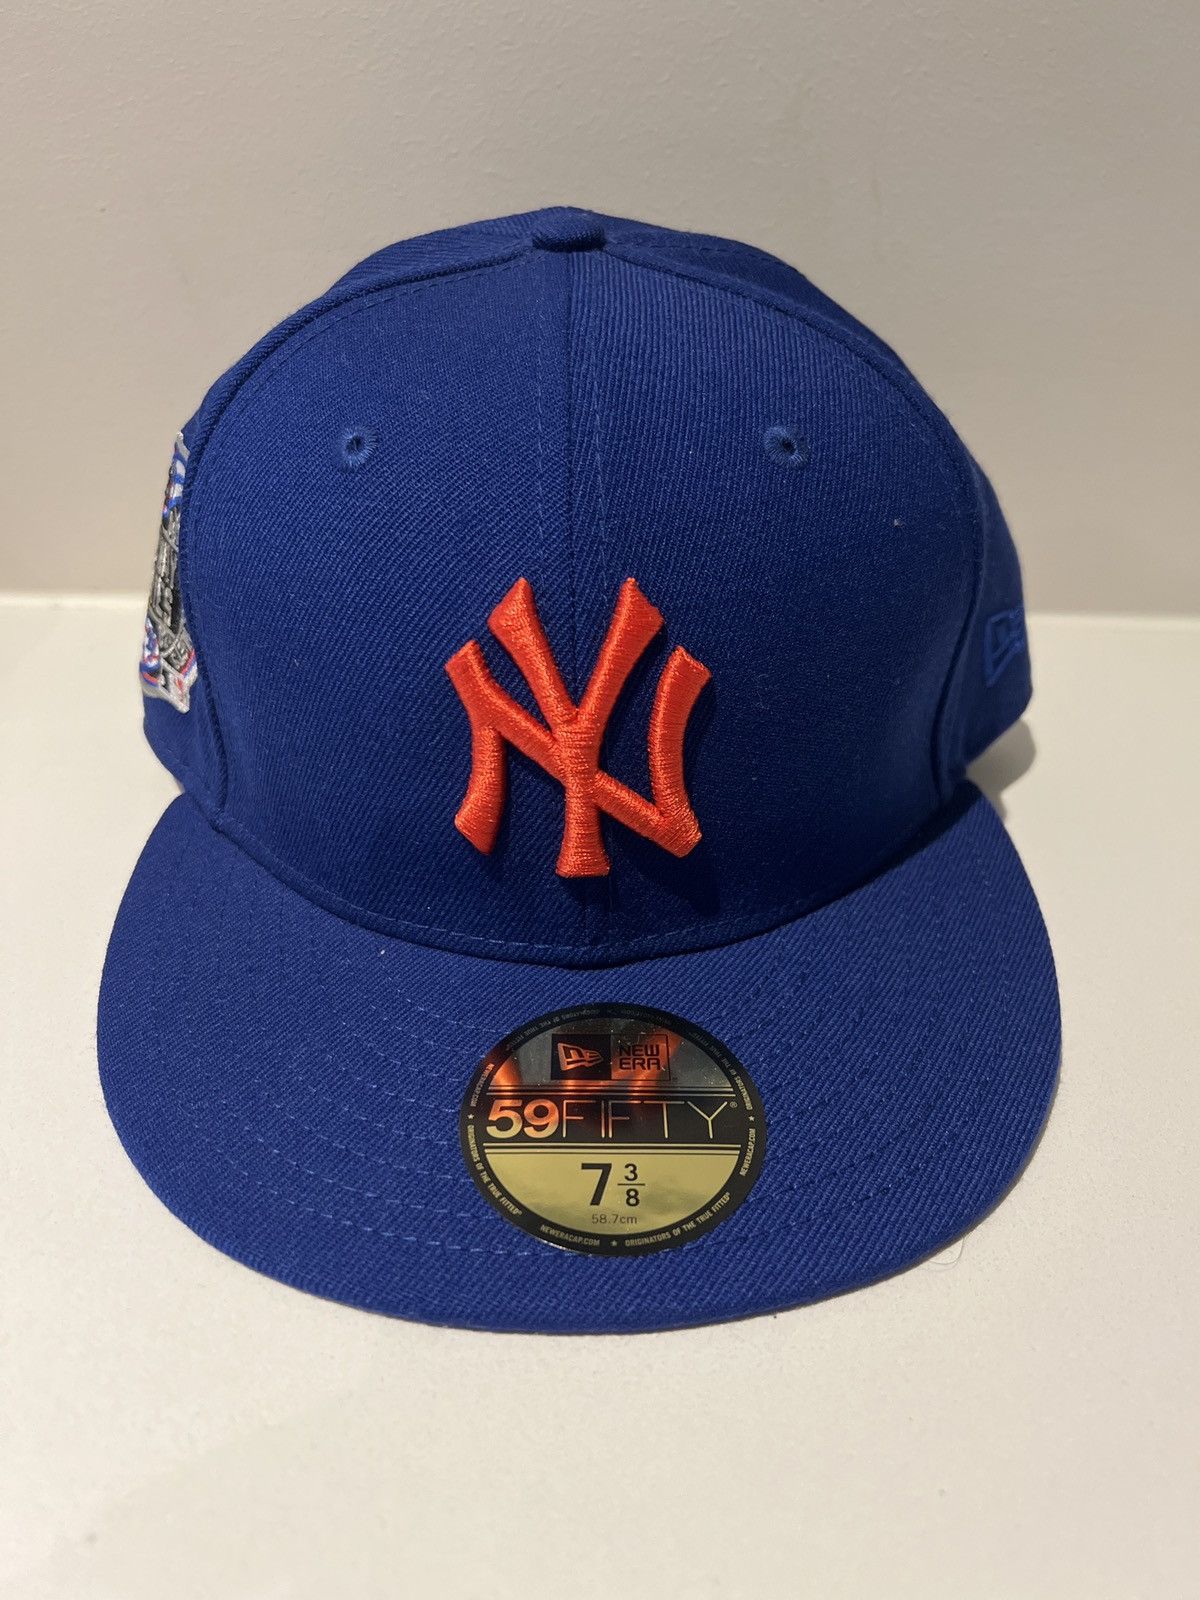 Kith Kith x New Era Subway Series Hat - 7 3/8 | Grailed